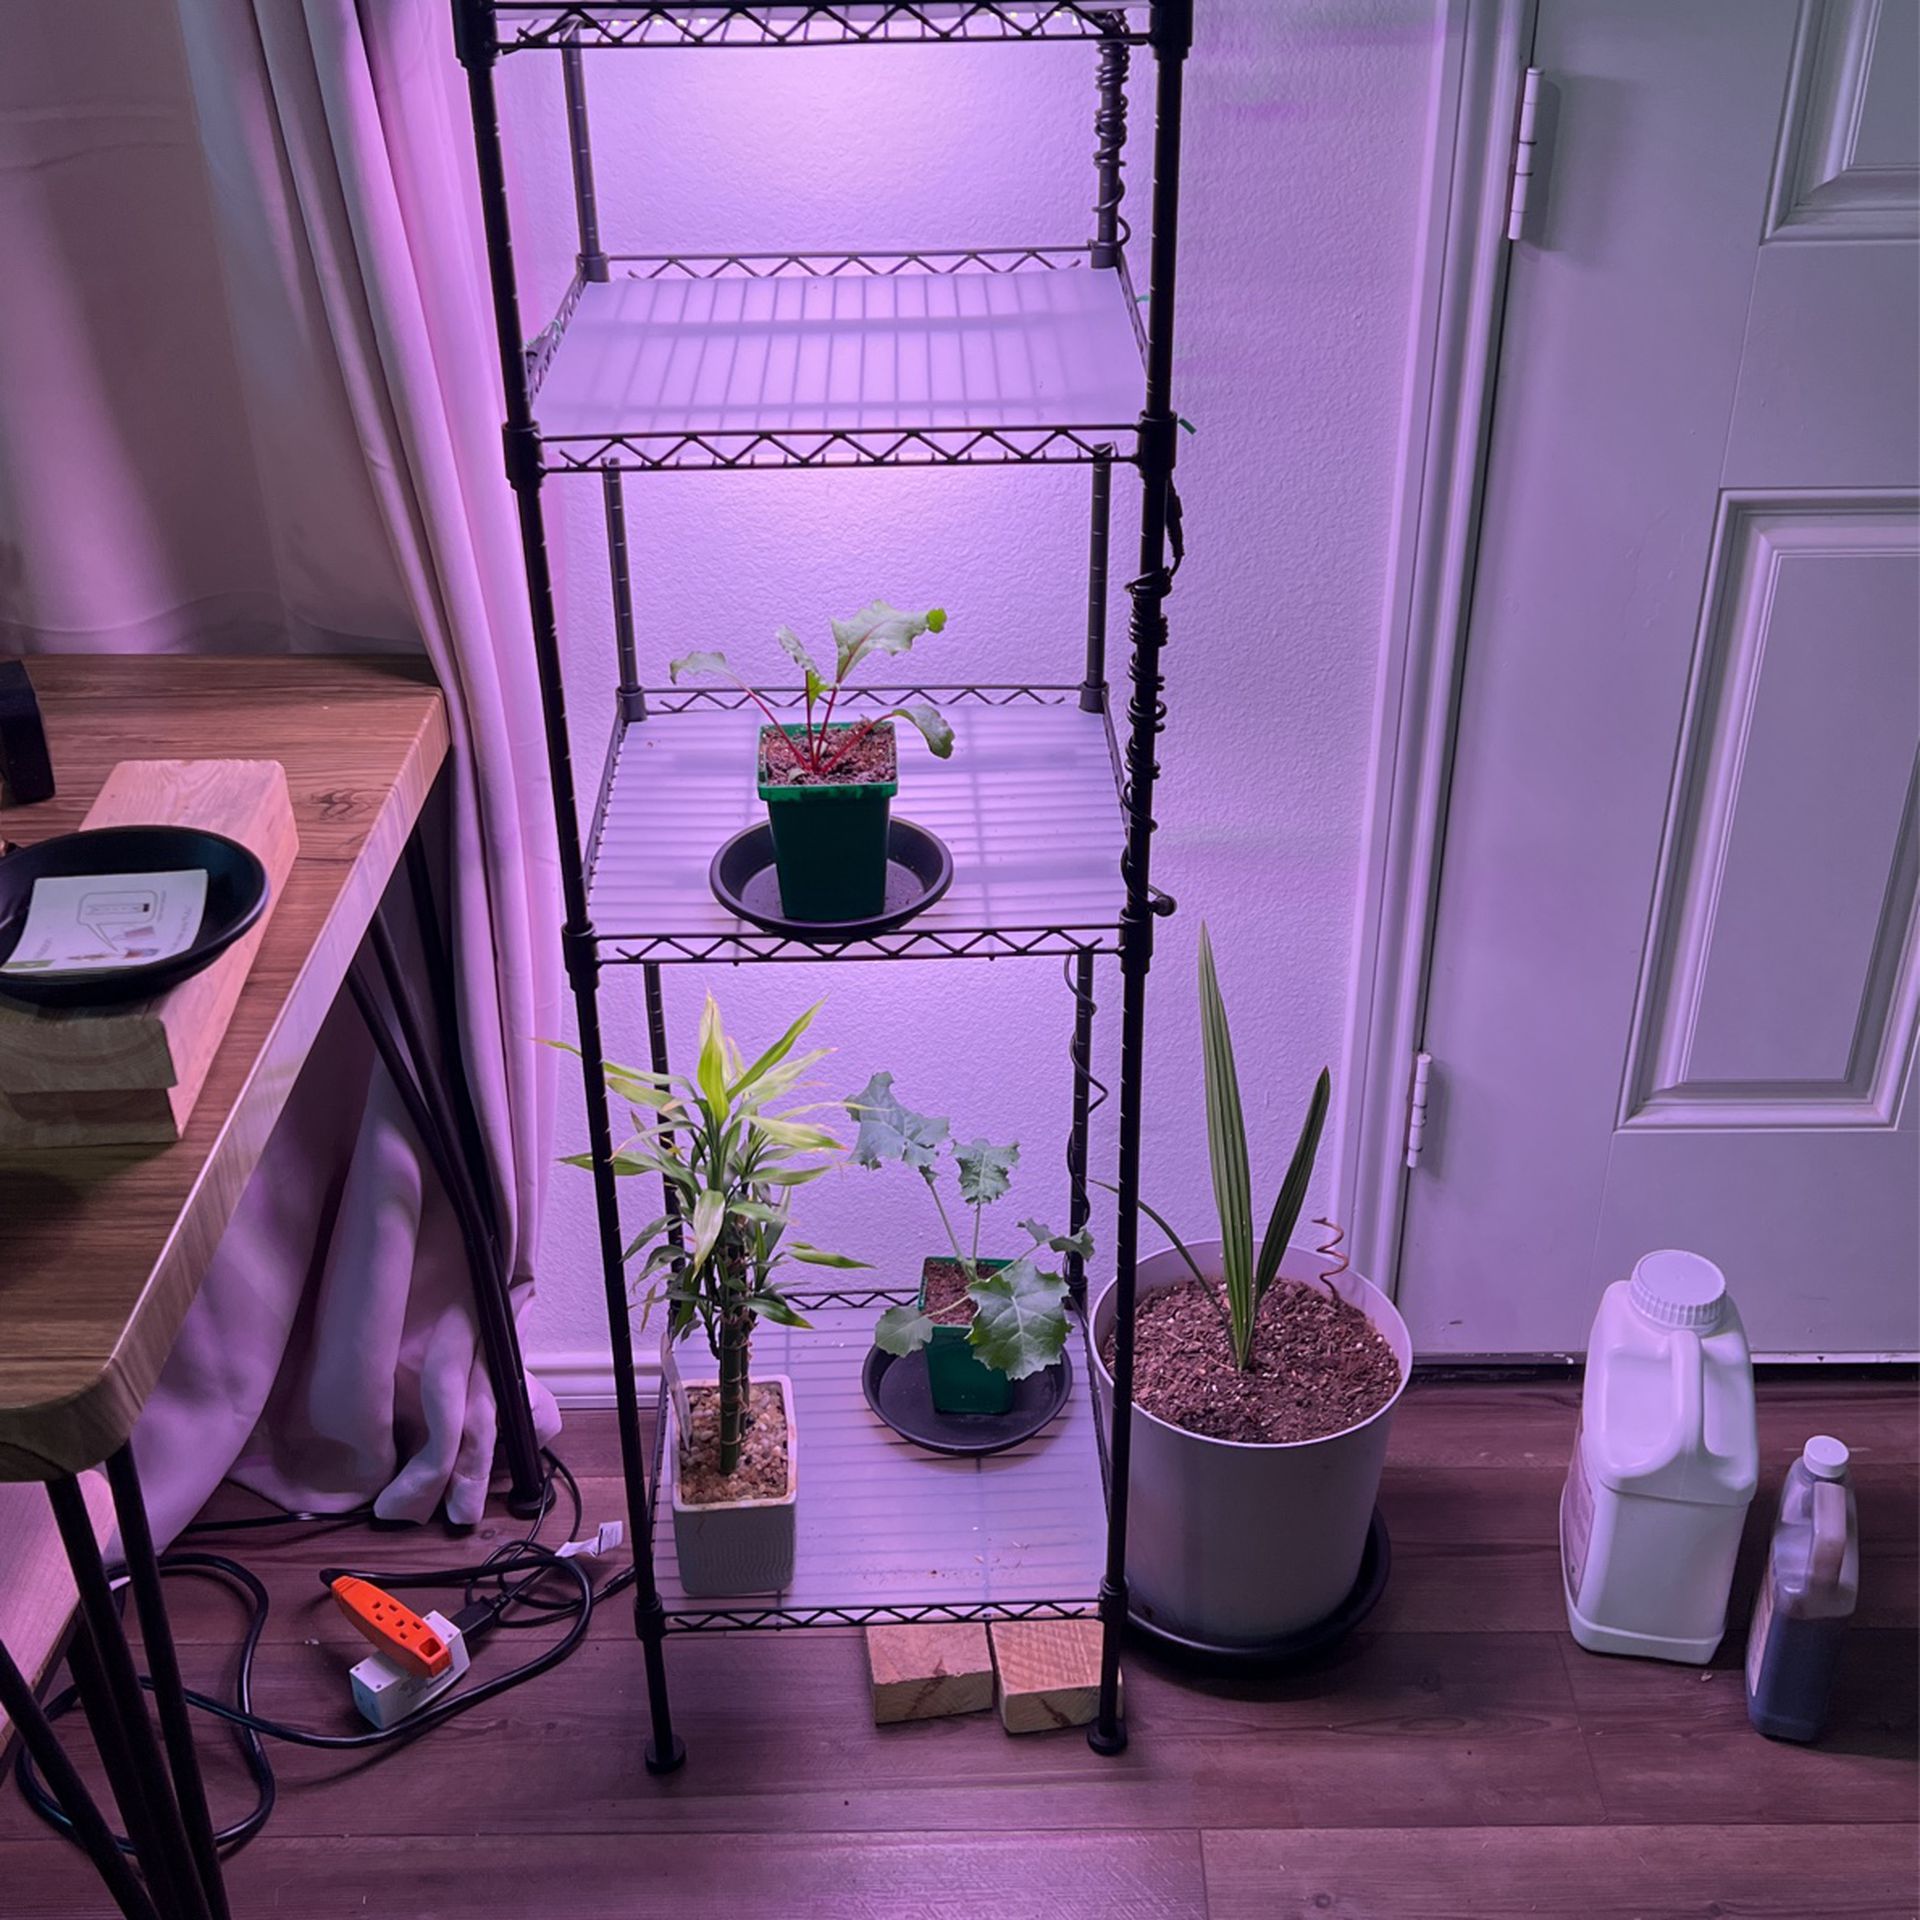 Plant Grow Light Three Levels.